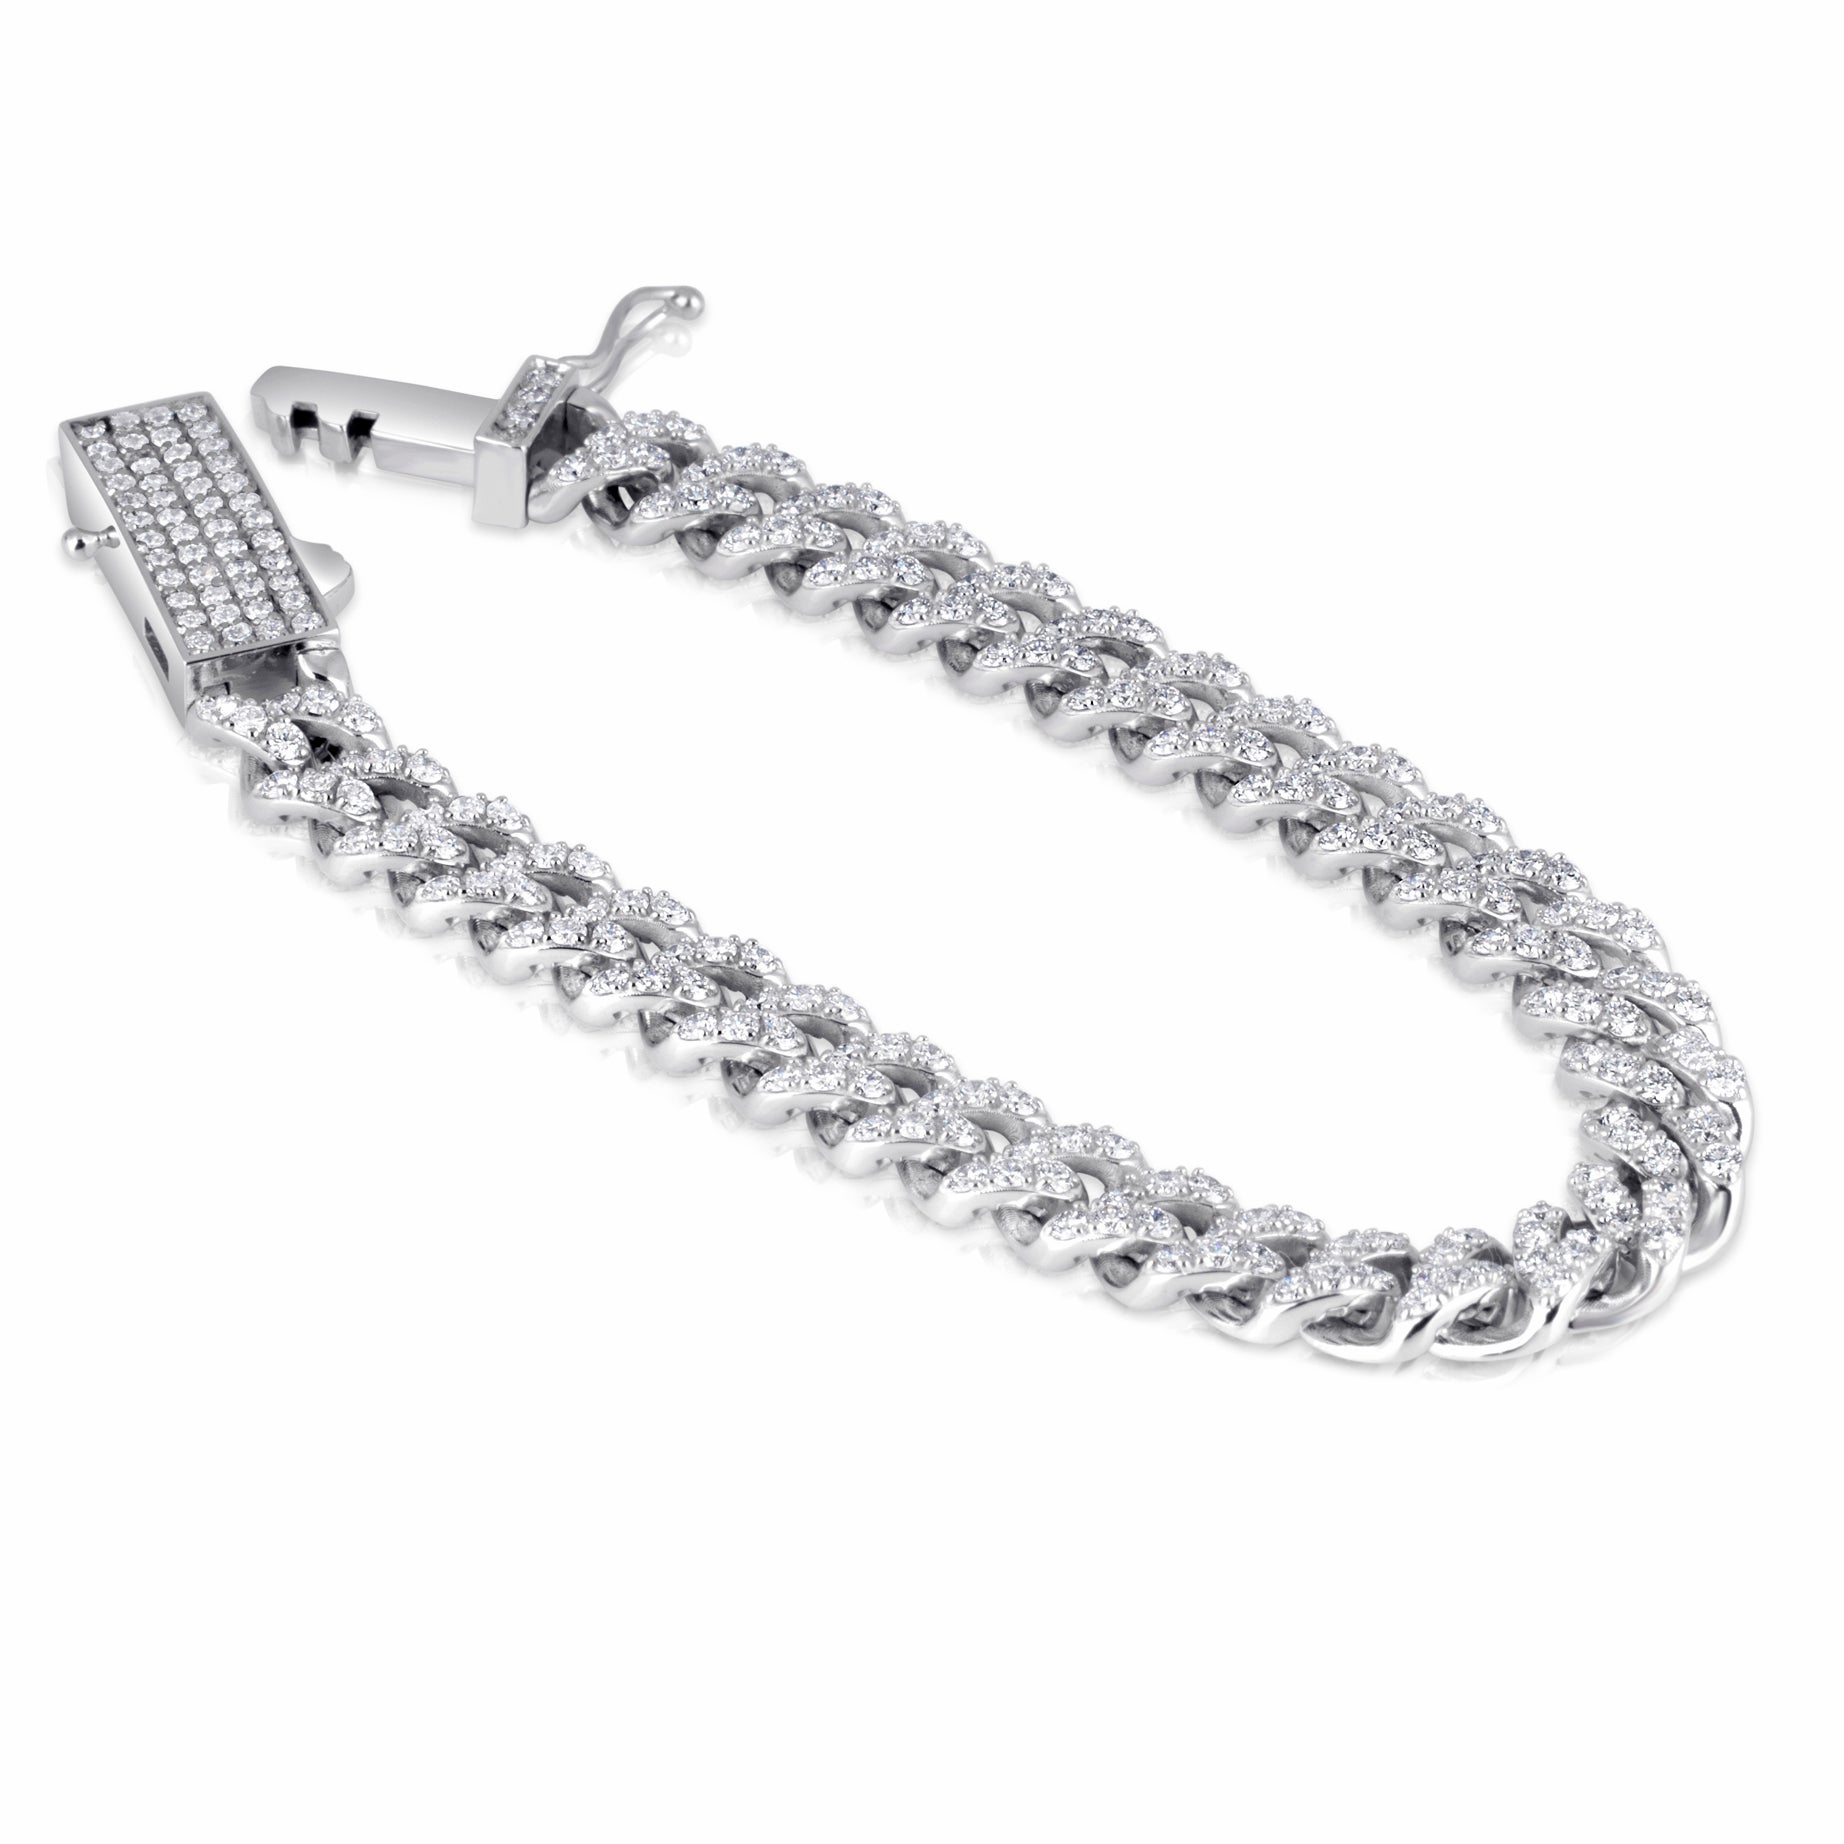 Stainless Steel 18K Gold Diamond Cut Curb Chain Bracelet